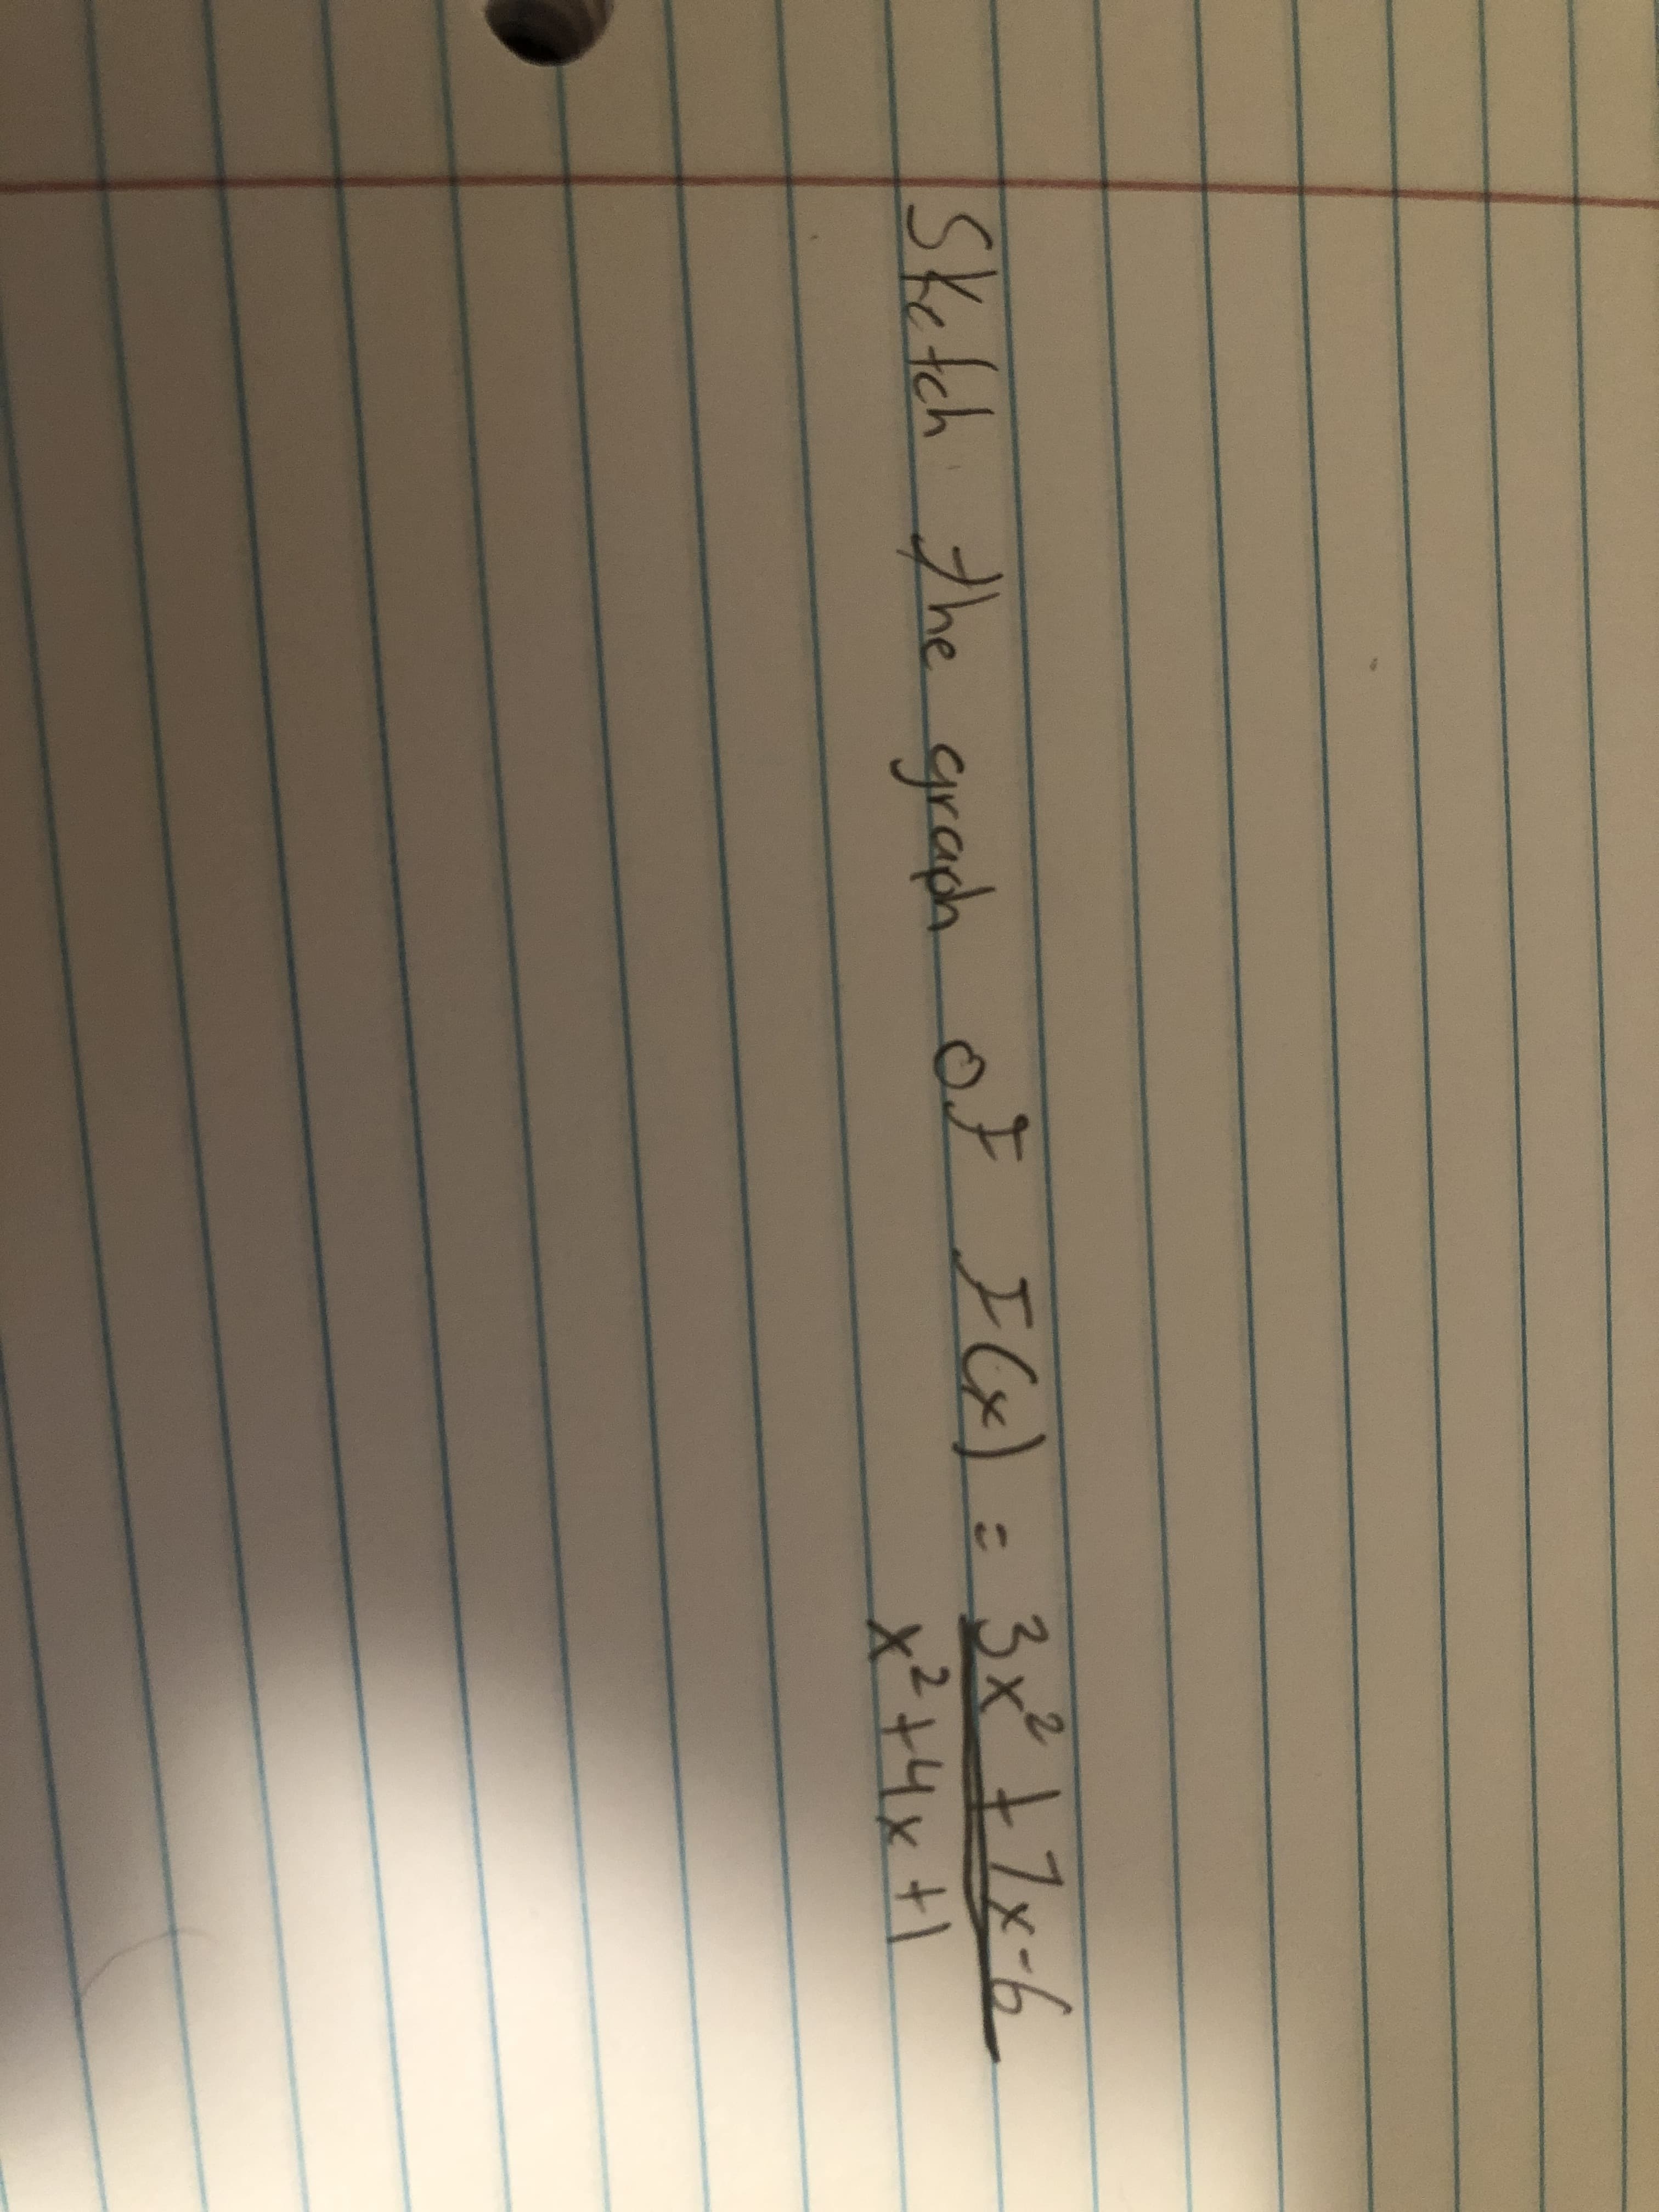 Sketch the crach oF I (x) = 3x² +7x-6
x²+4x+1
F I(x)
